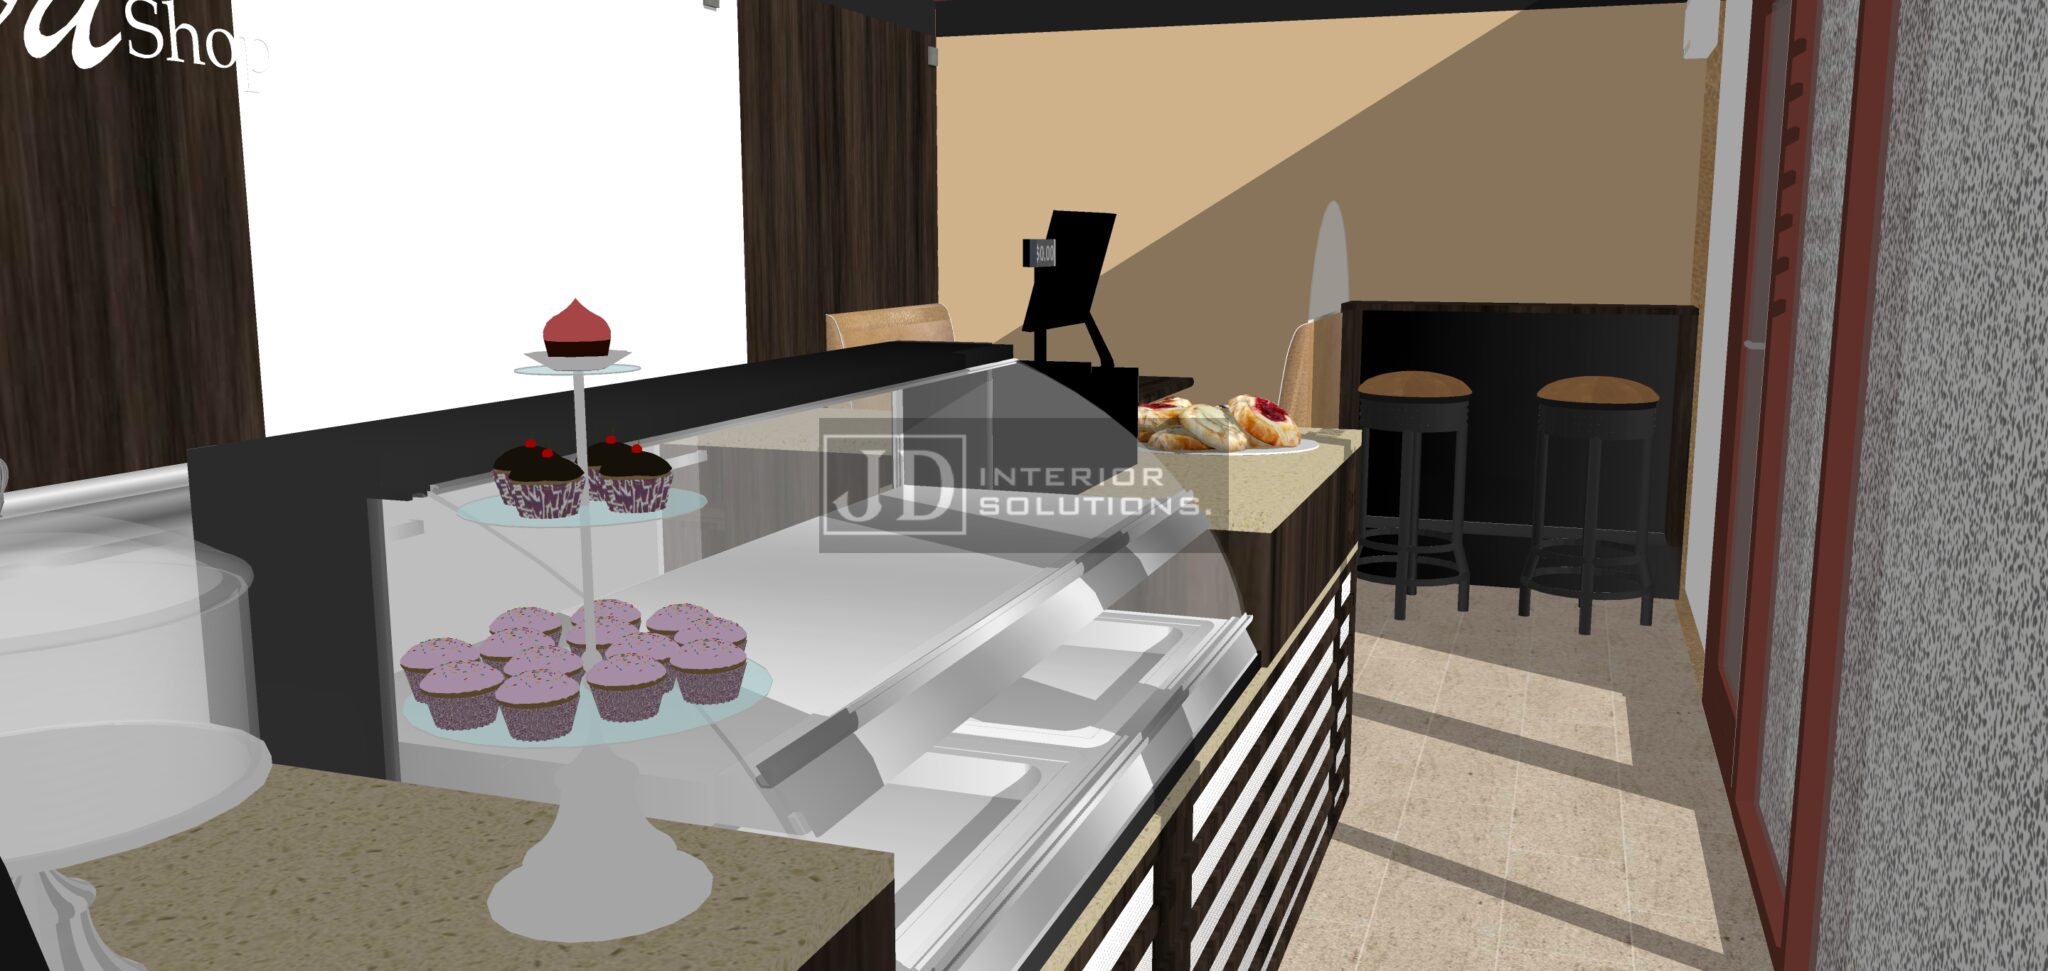 Little Dessert Shop Seating Option 4- 6.8m x 3.4m POD